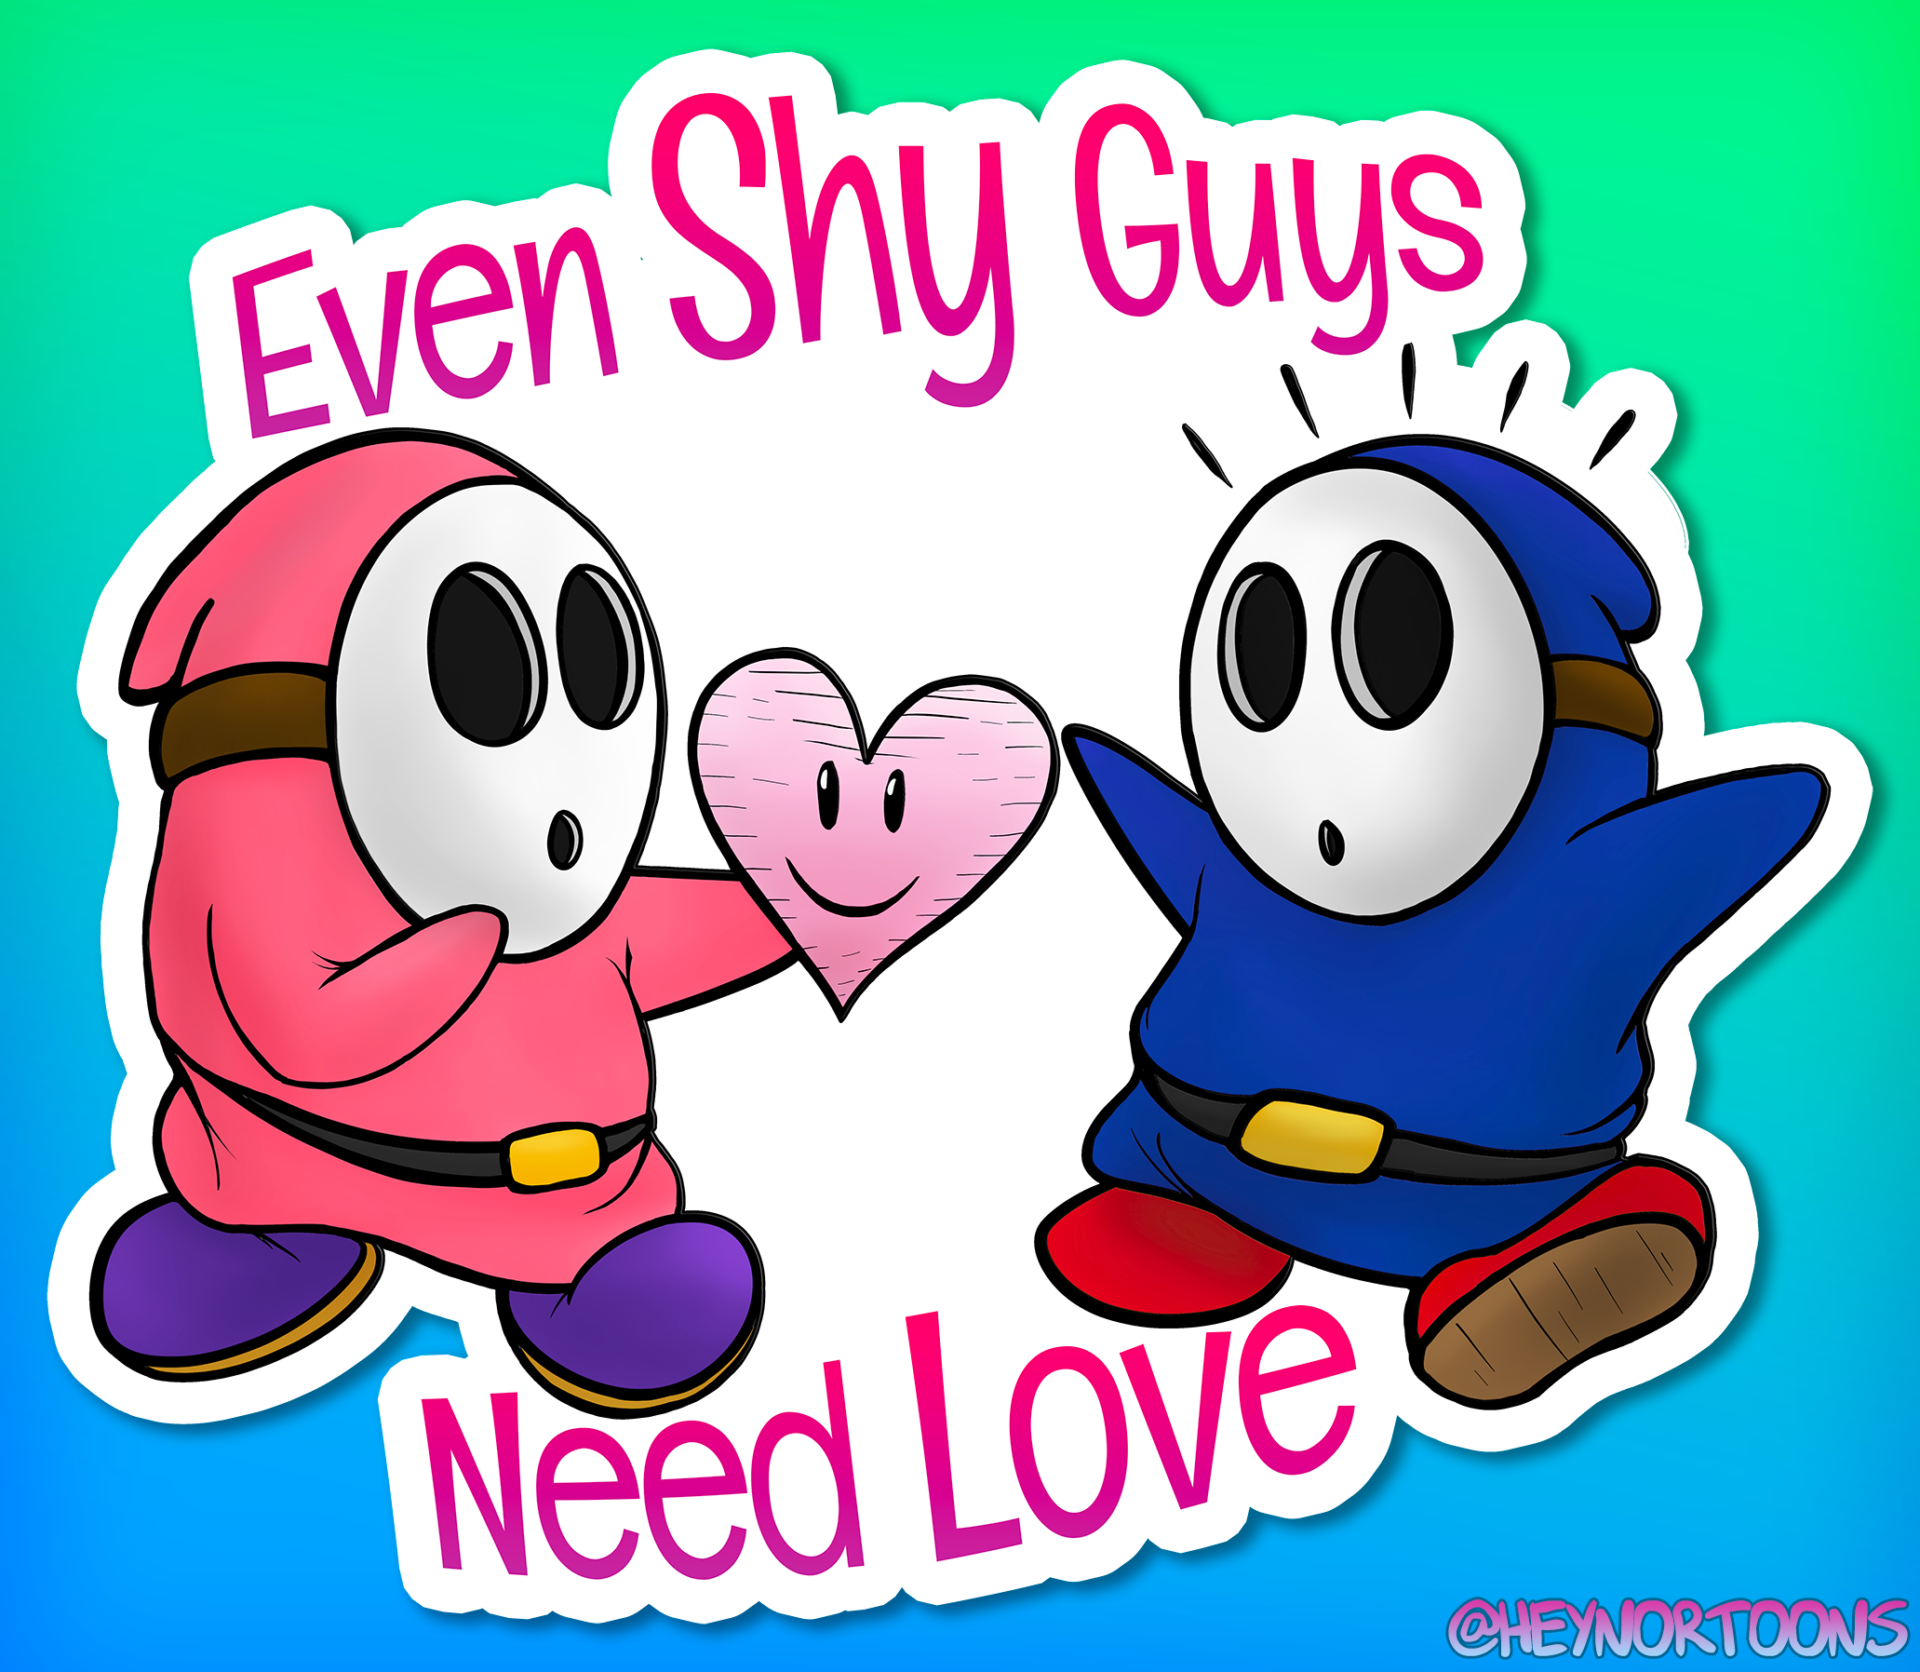 Even Shy Guys Need Love